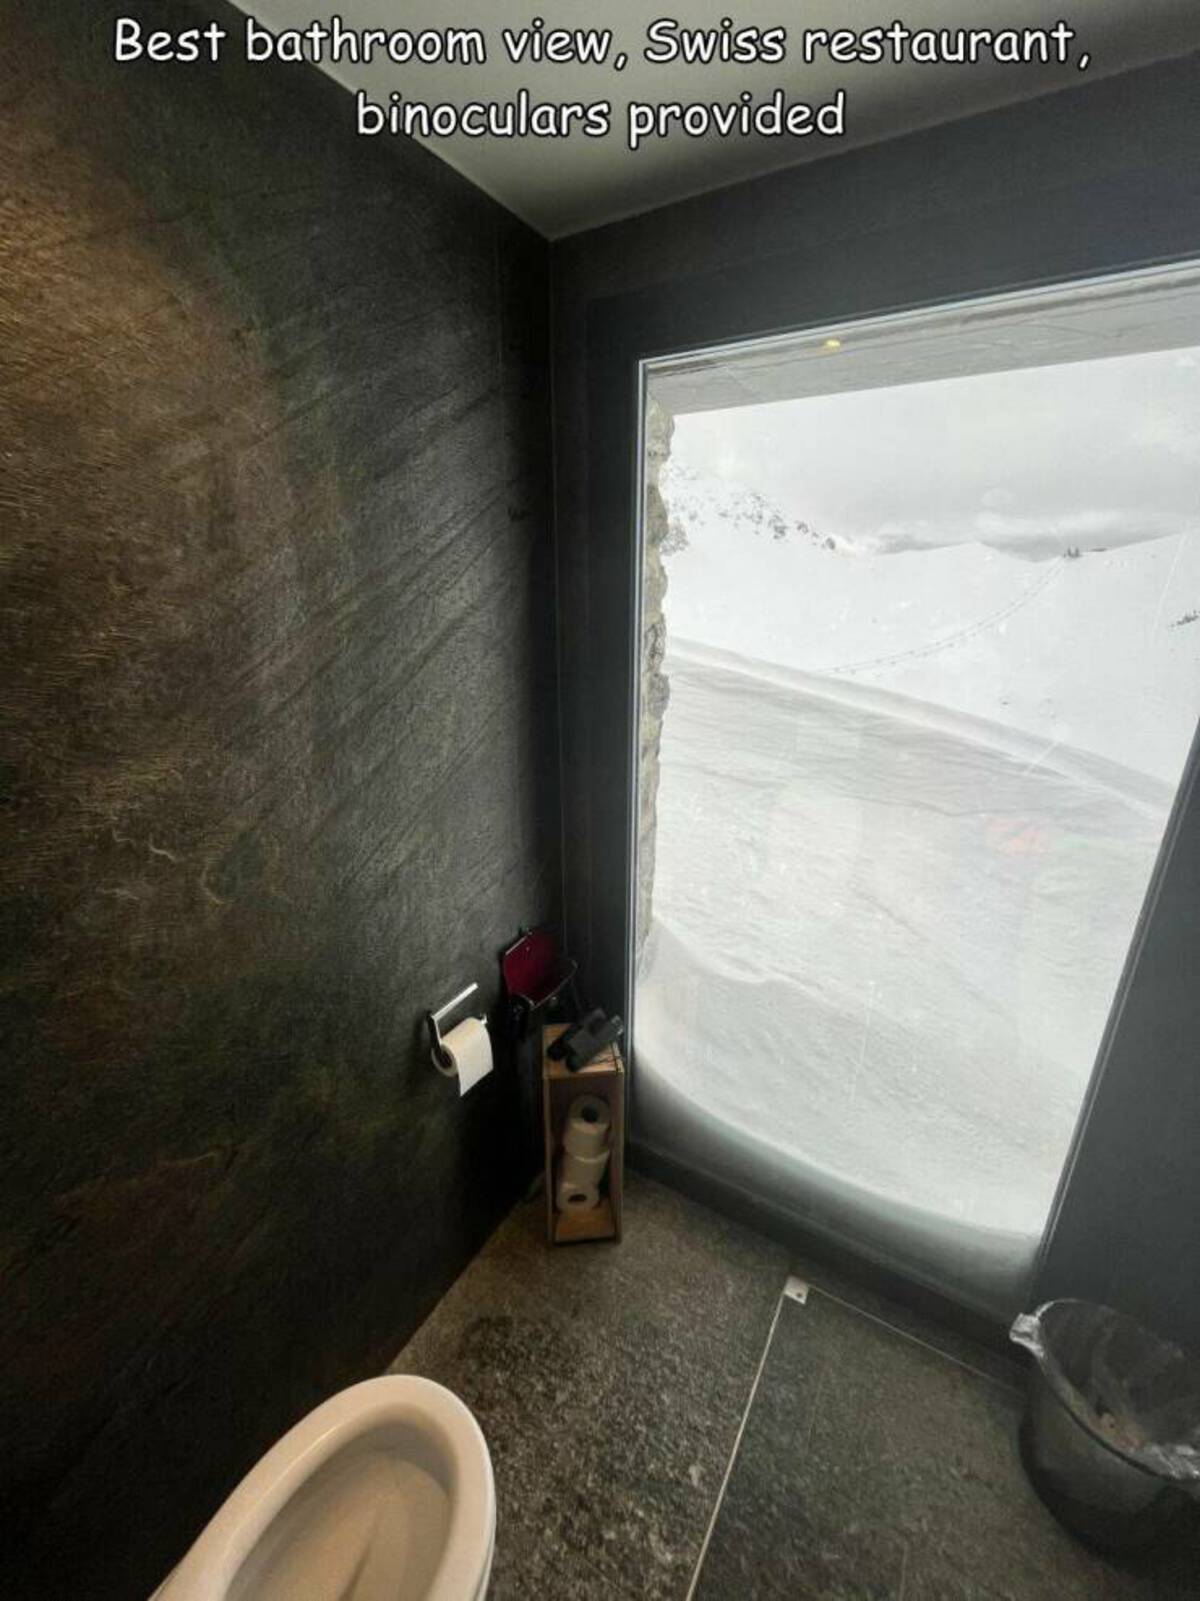 wall - Best bathroom view, Swiss restaurant, binoculars provided